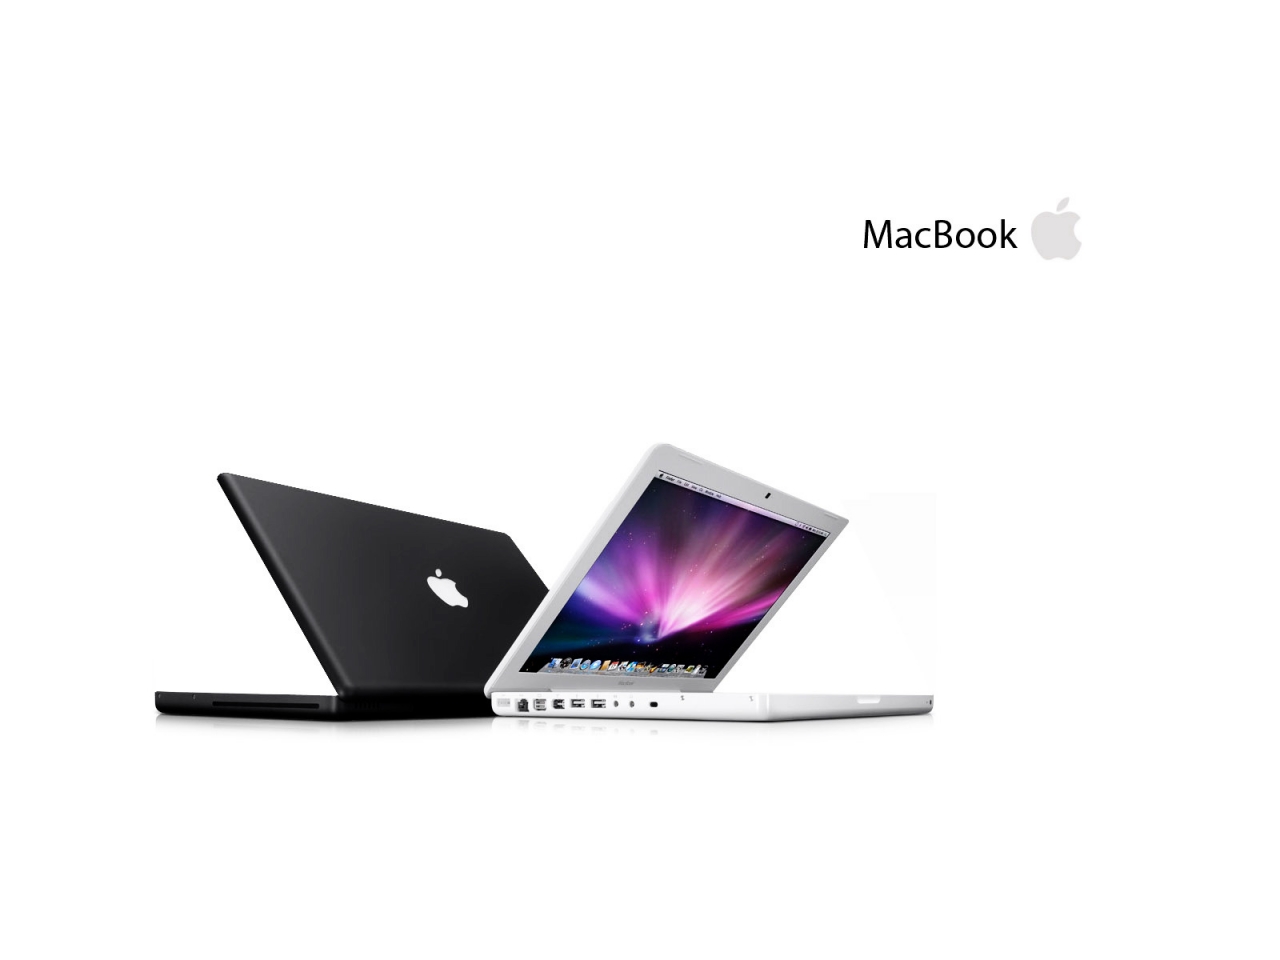 Apple MacBook for 1280 x 960 resolution